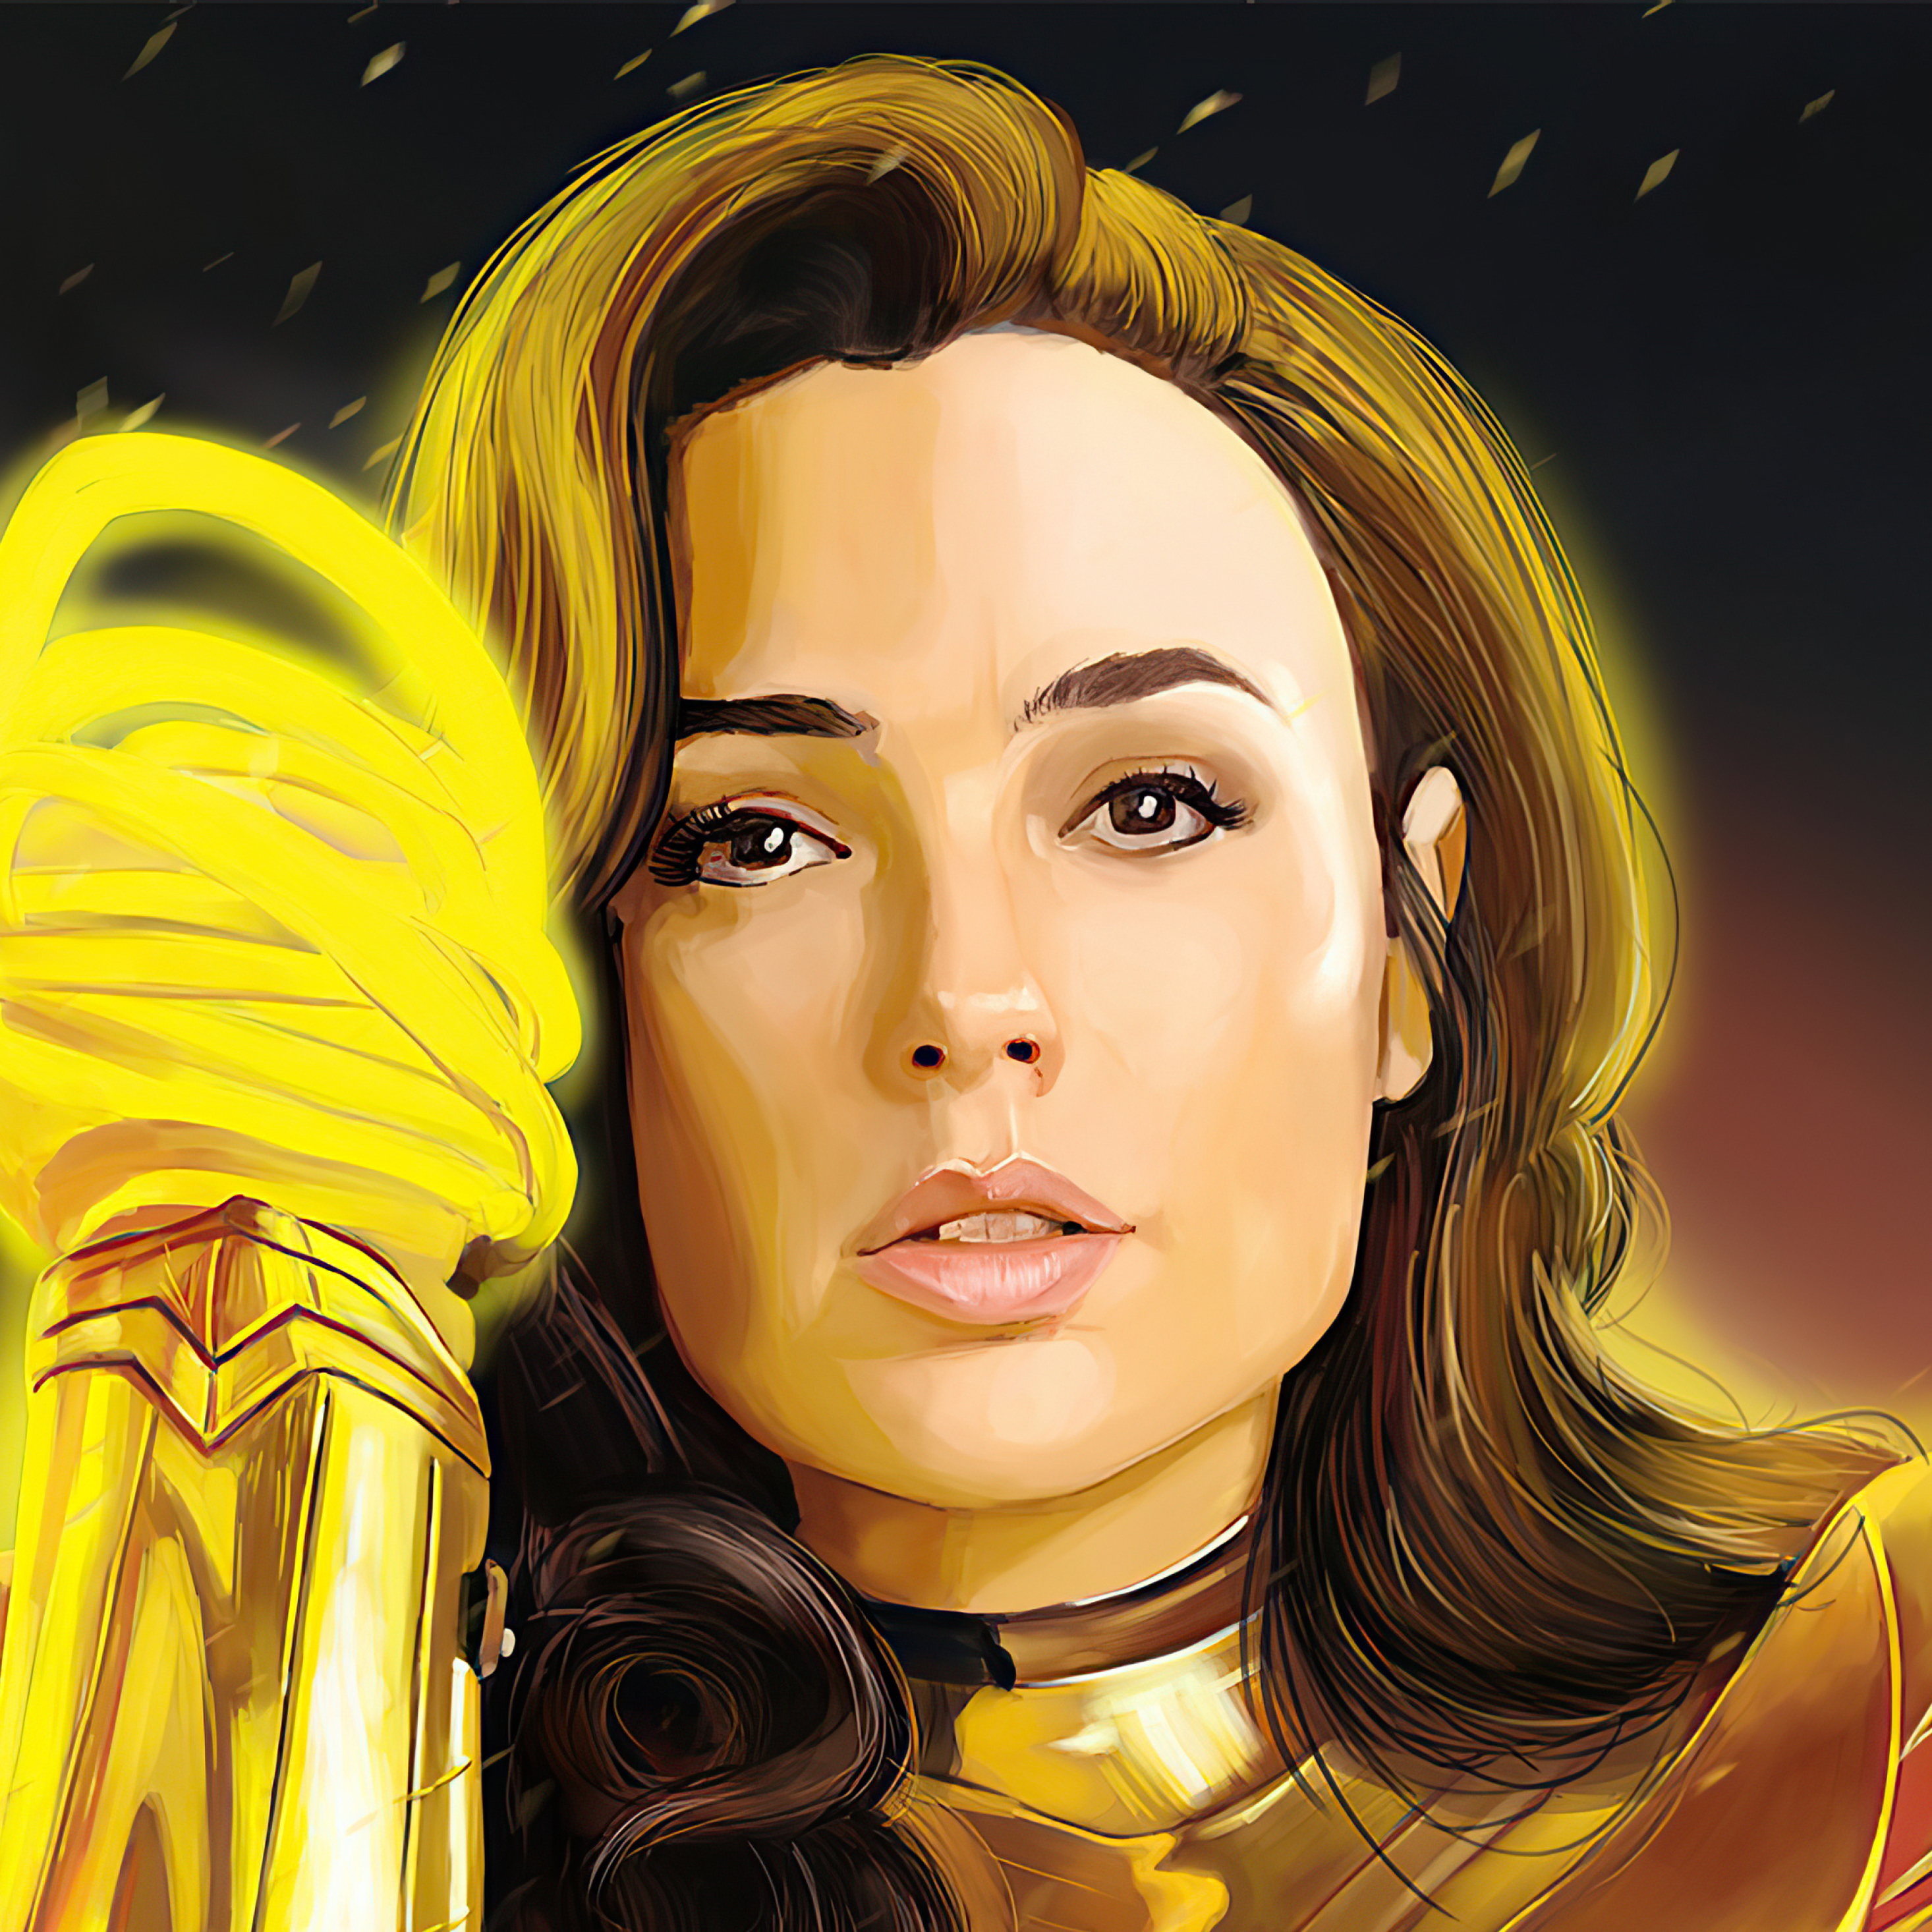 Download 2932x2932 Gold Wonder Woman with Lasso of Truth Art Ipad Pro Retina Display Wallpaper, HD ...